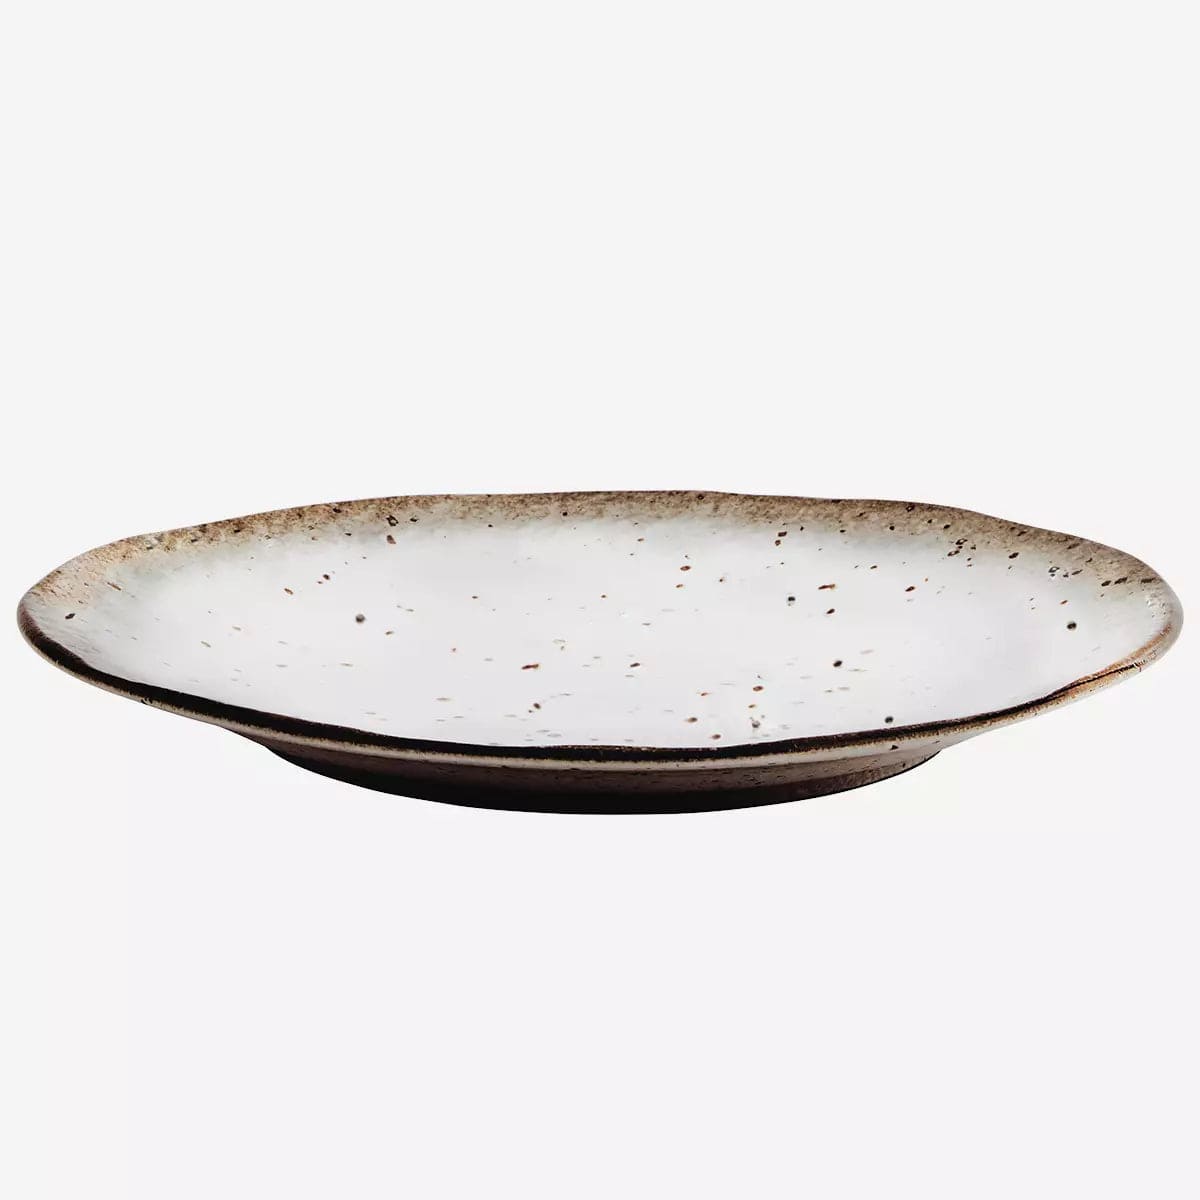 MADAM STOLTZ Πιάτο Πιάτο Ρηχό, Μεγάλο, Stor, Κεραμικό, Άσπρο/Κάφε, D:27x3 cm, MADAM STOLTZ